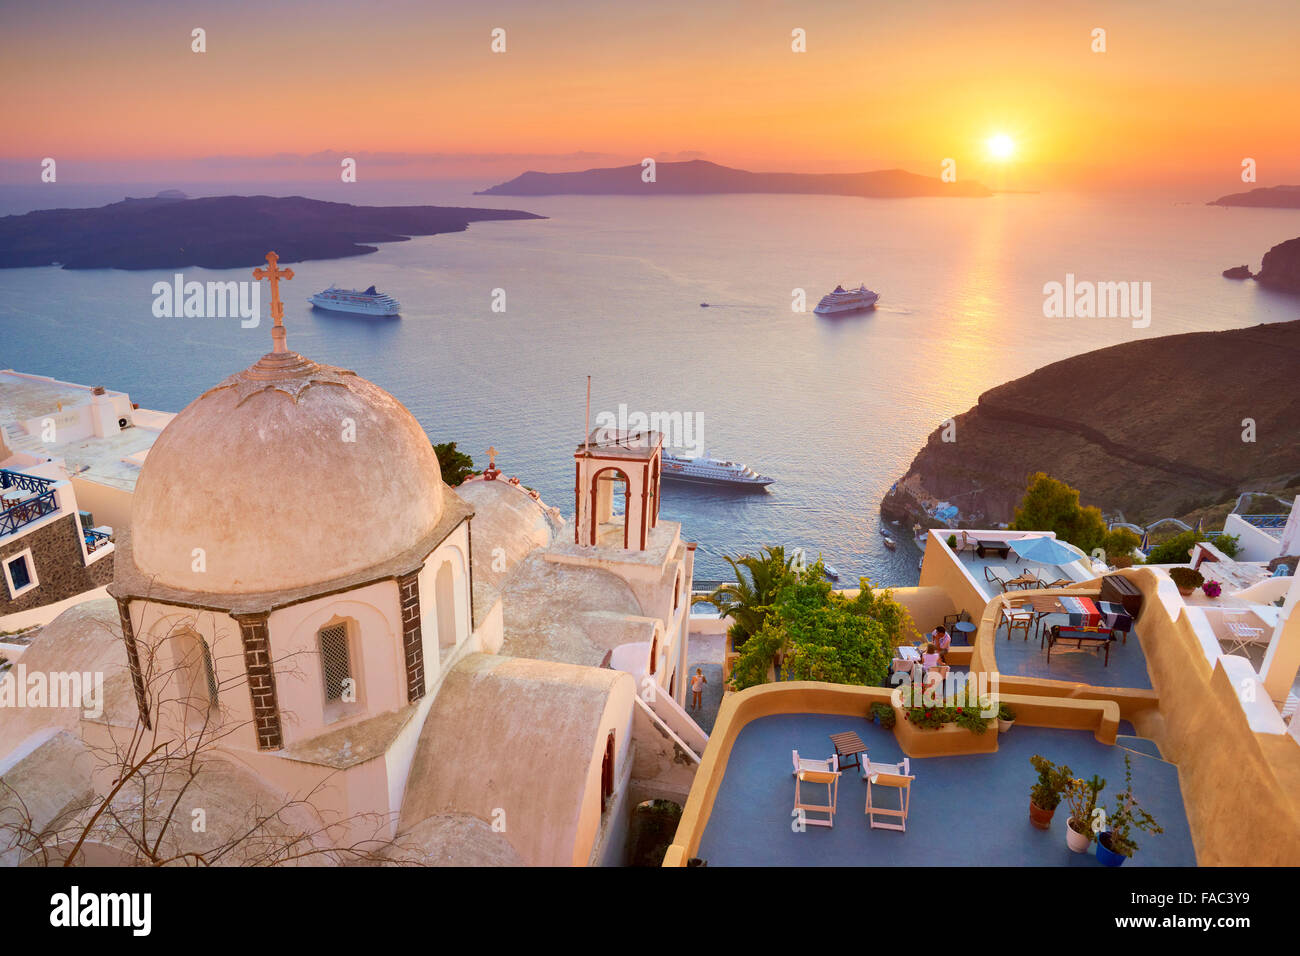 Santorini Island, Greece - view at church at sunset in Thira (capital city of Santorini) Stock Photo